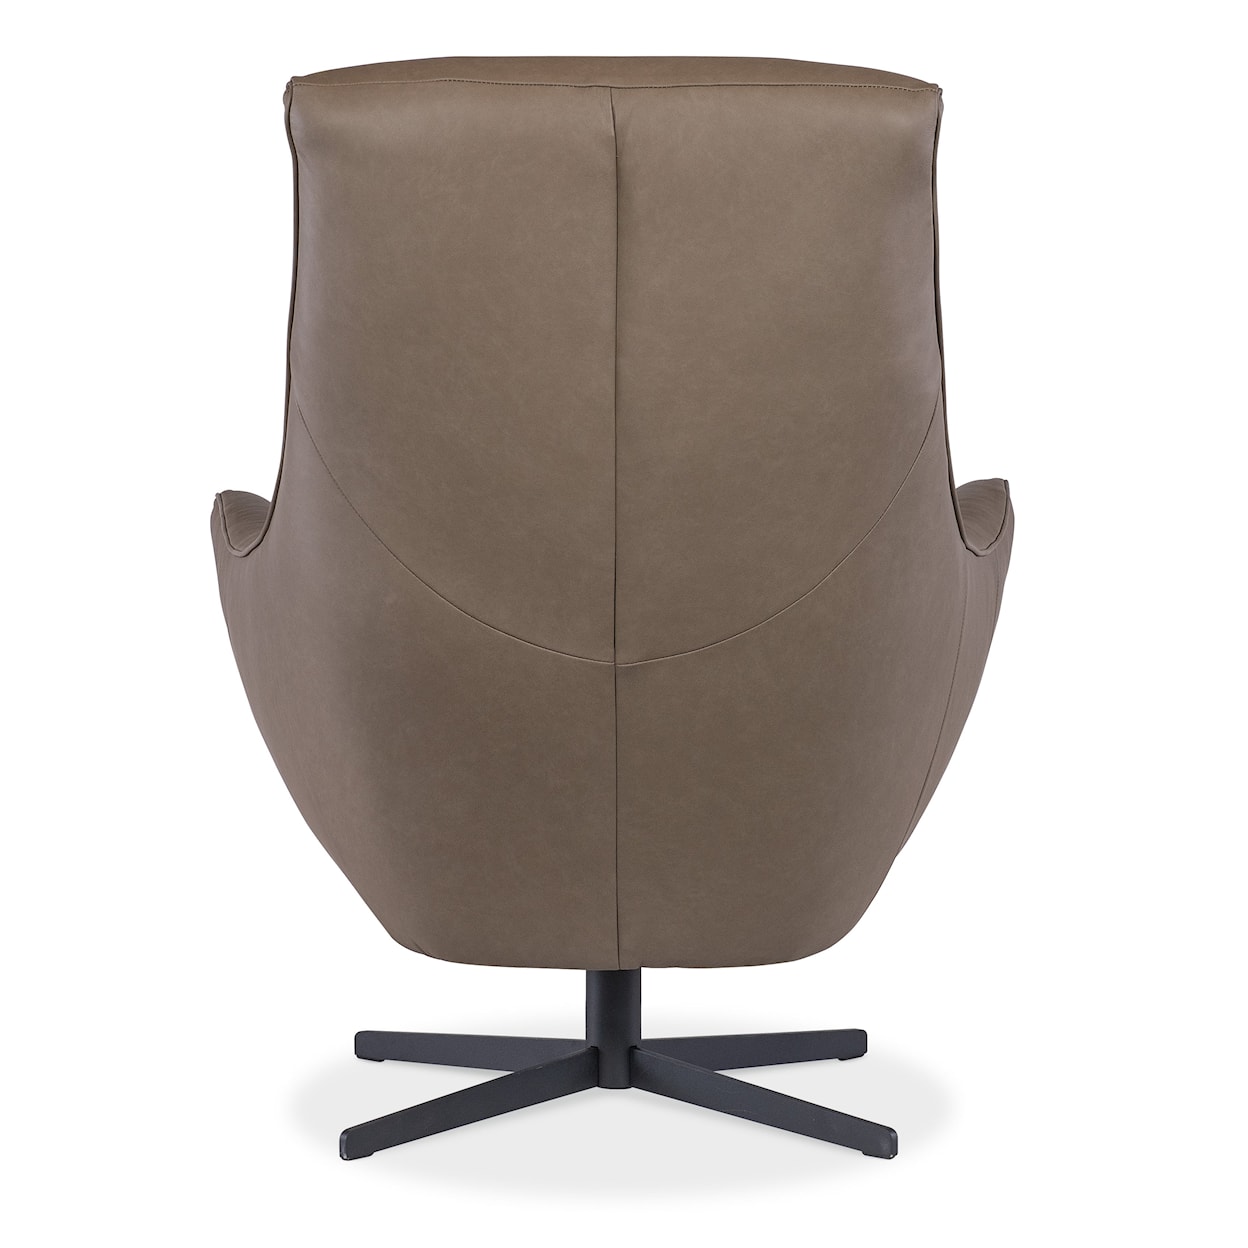 Hooker Furniture CC Swivel Chair